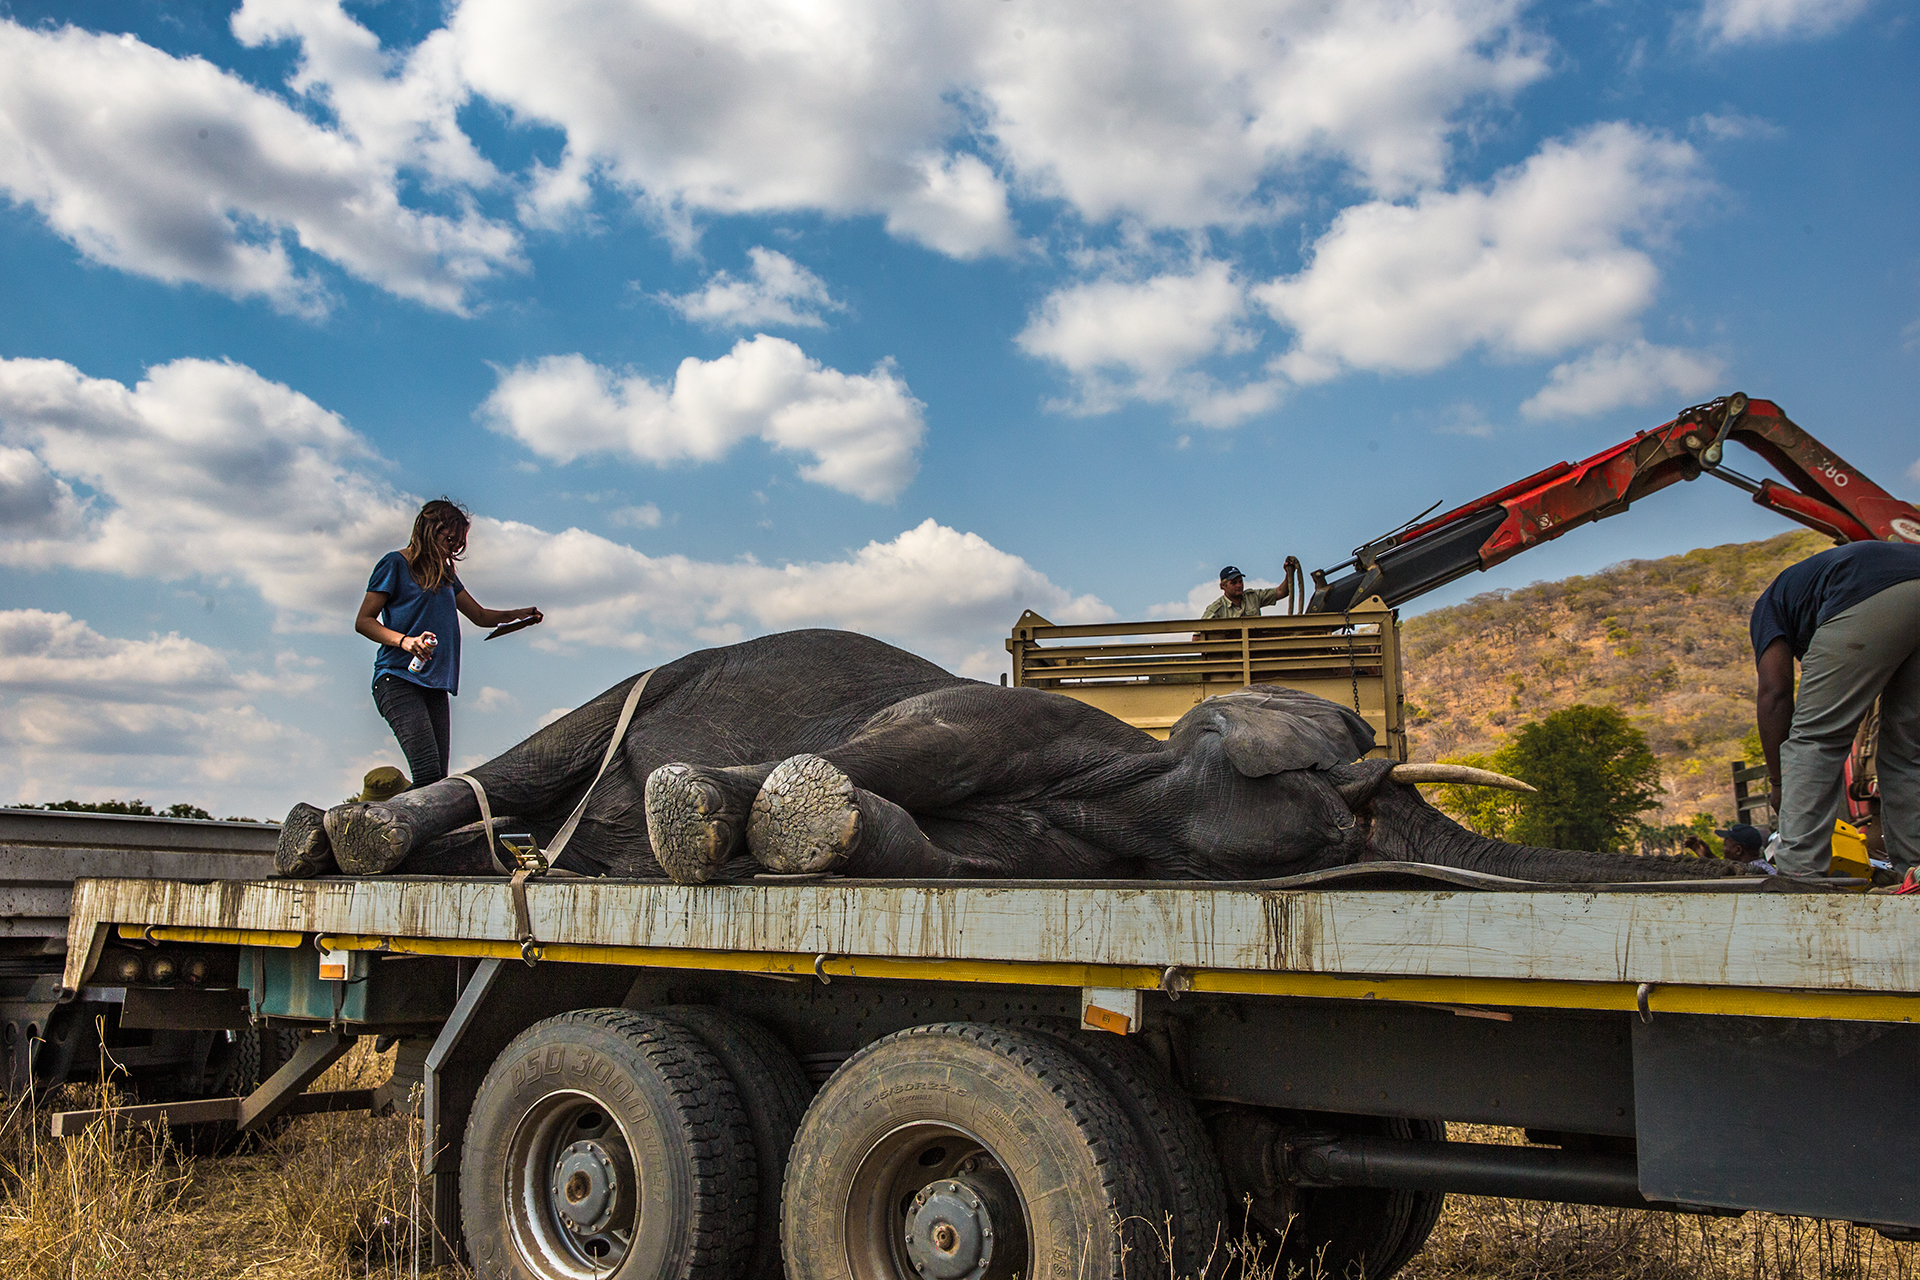 A tranqulised elephant awaits transport. Photo by Anita Mishra.